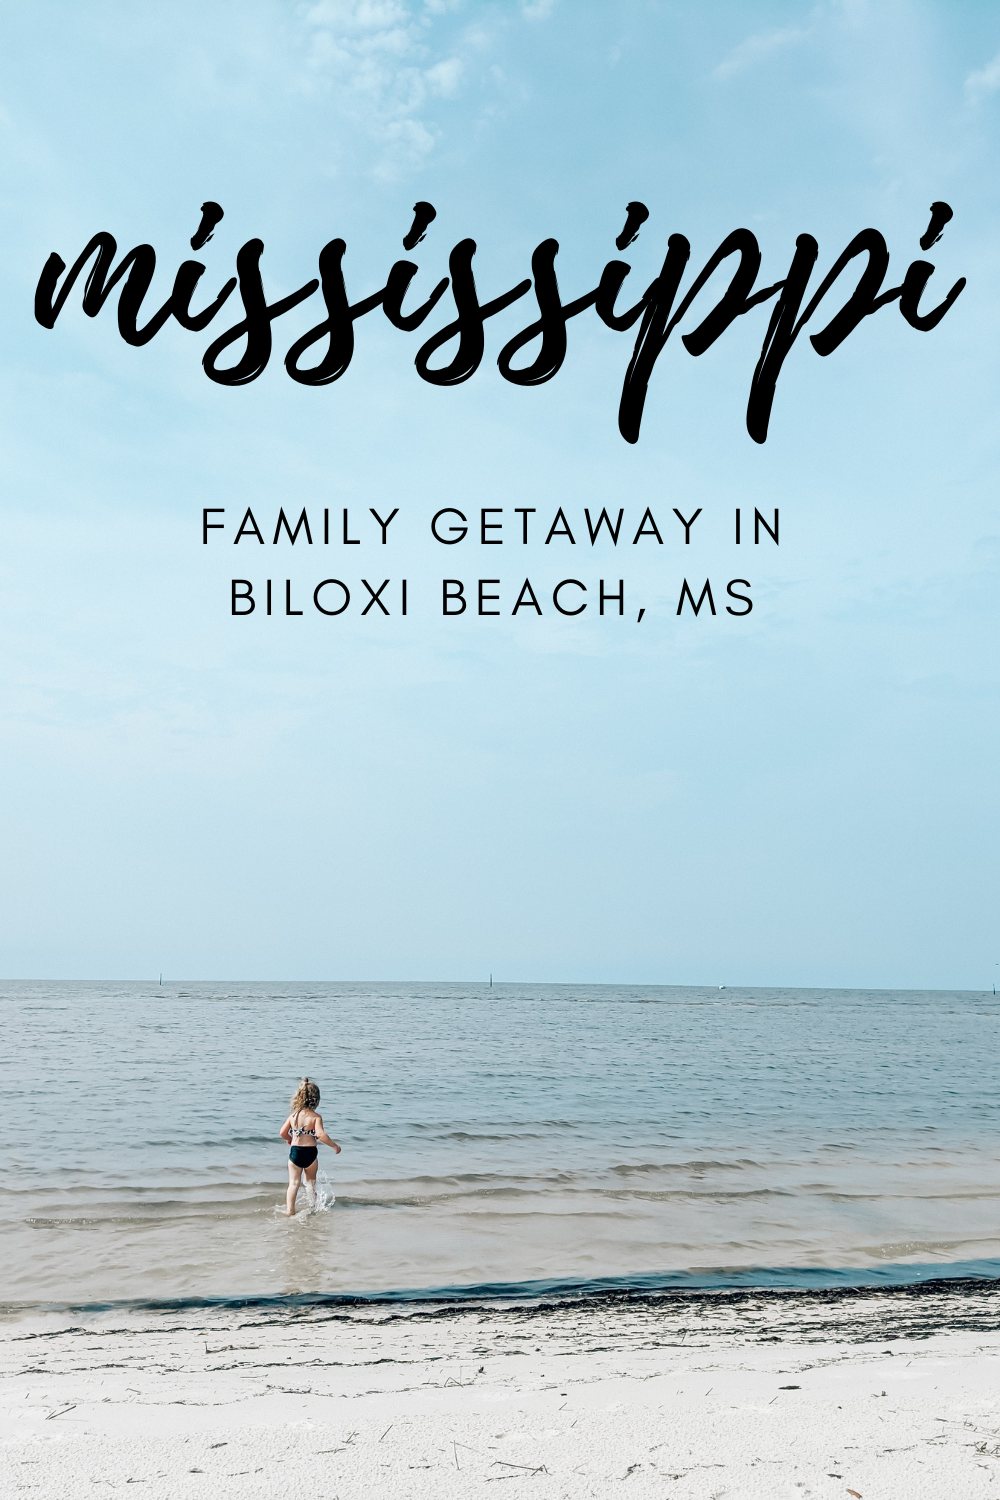 Family Weekend Getaway in Mississippi - Biloxi Beach Family Vacation - Biloxi MS with Kids - Kid-Friendly Activities in Biloxi - Kid Friendly Hotels in Biloxi MS